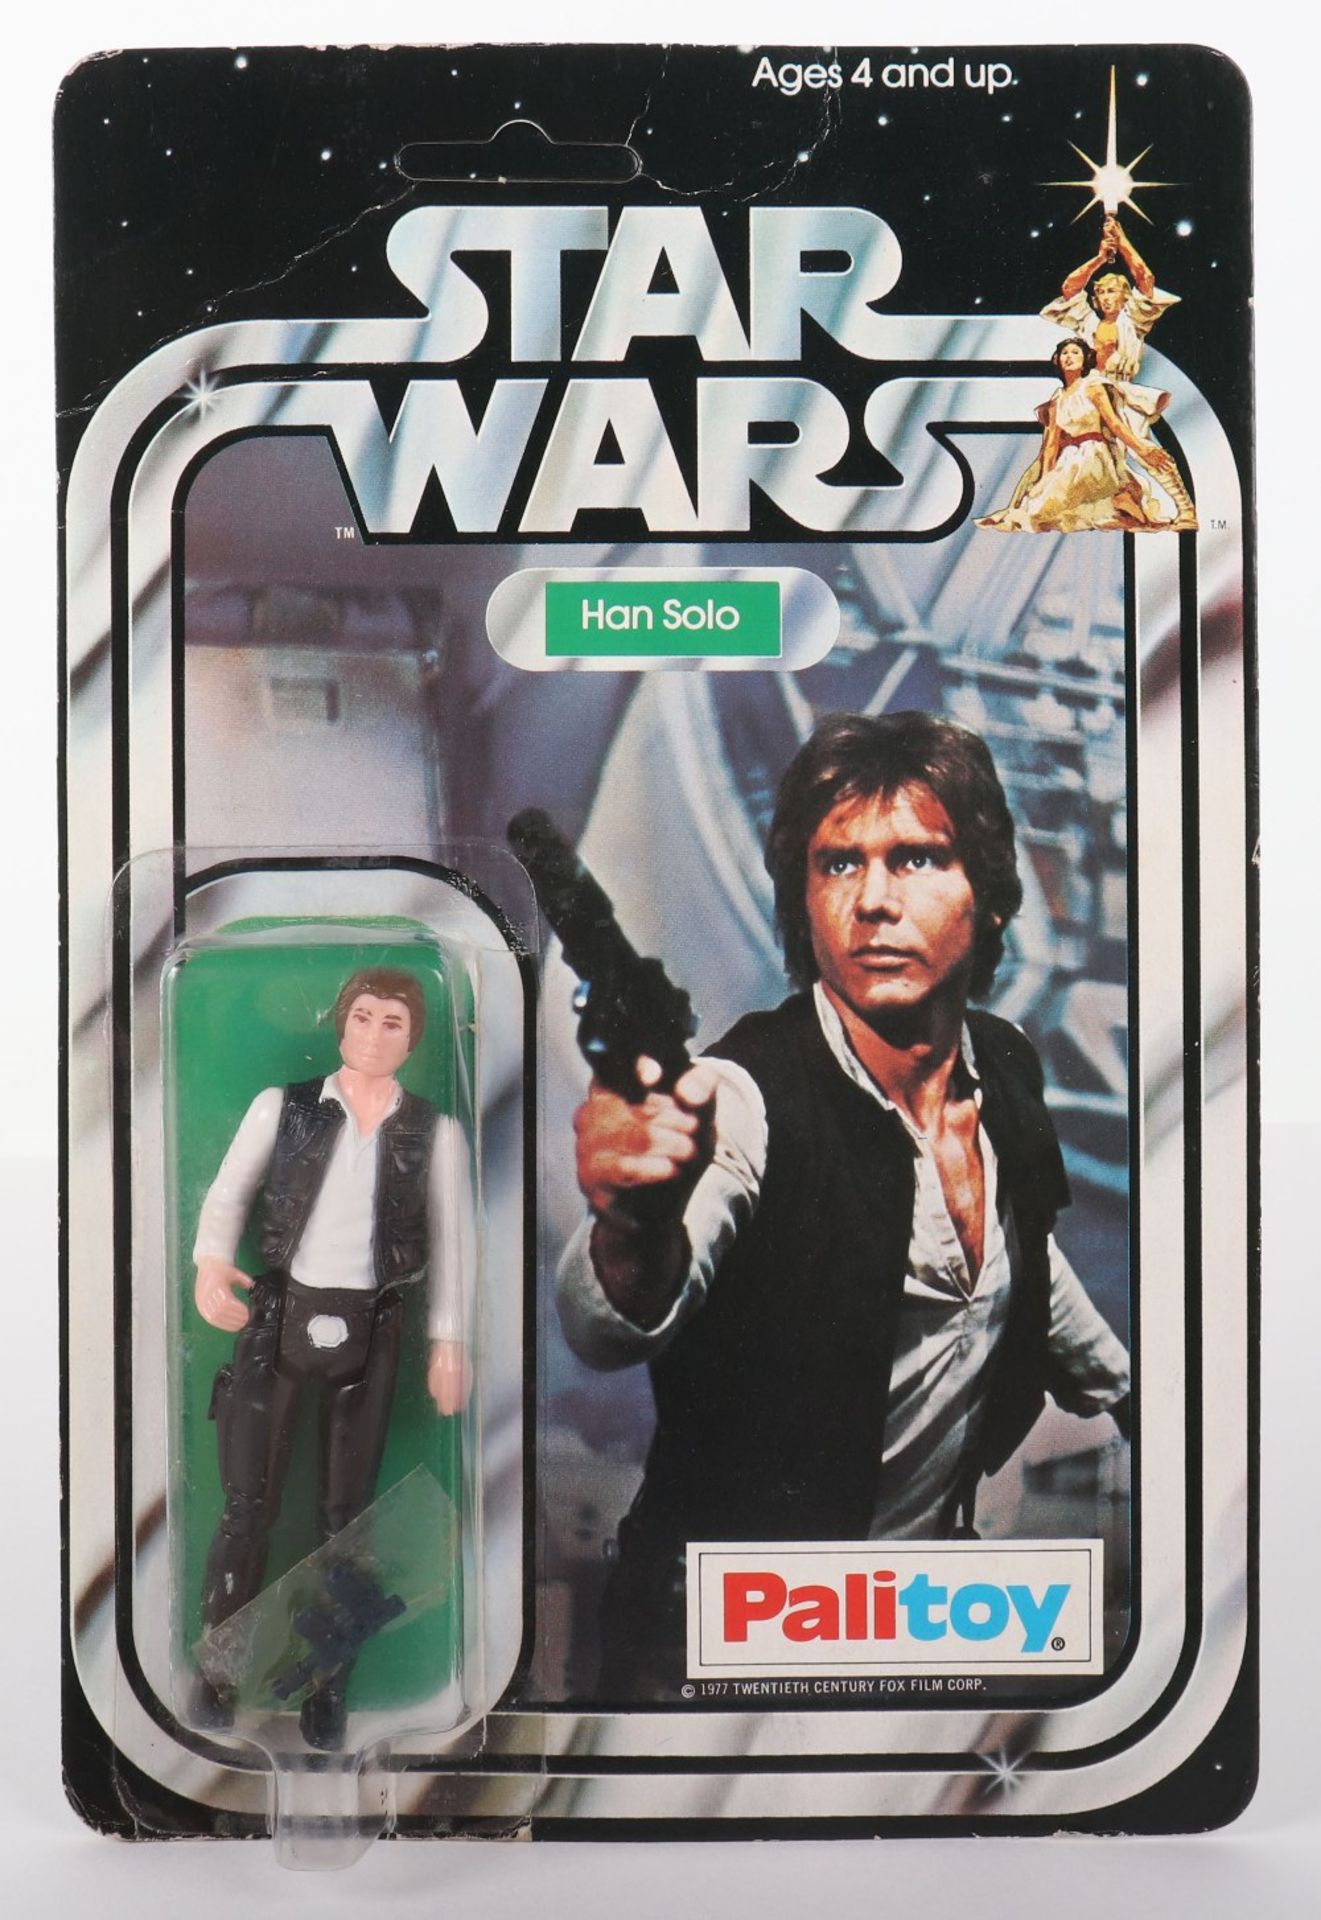 Palitoy Star Wars Han Solo Vintage Original Carded Figure